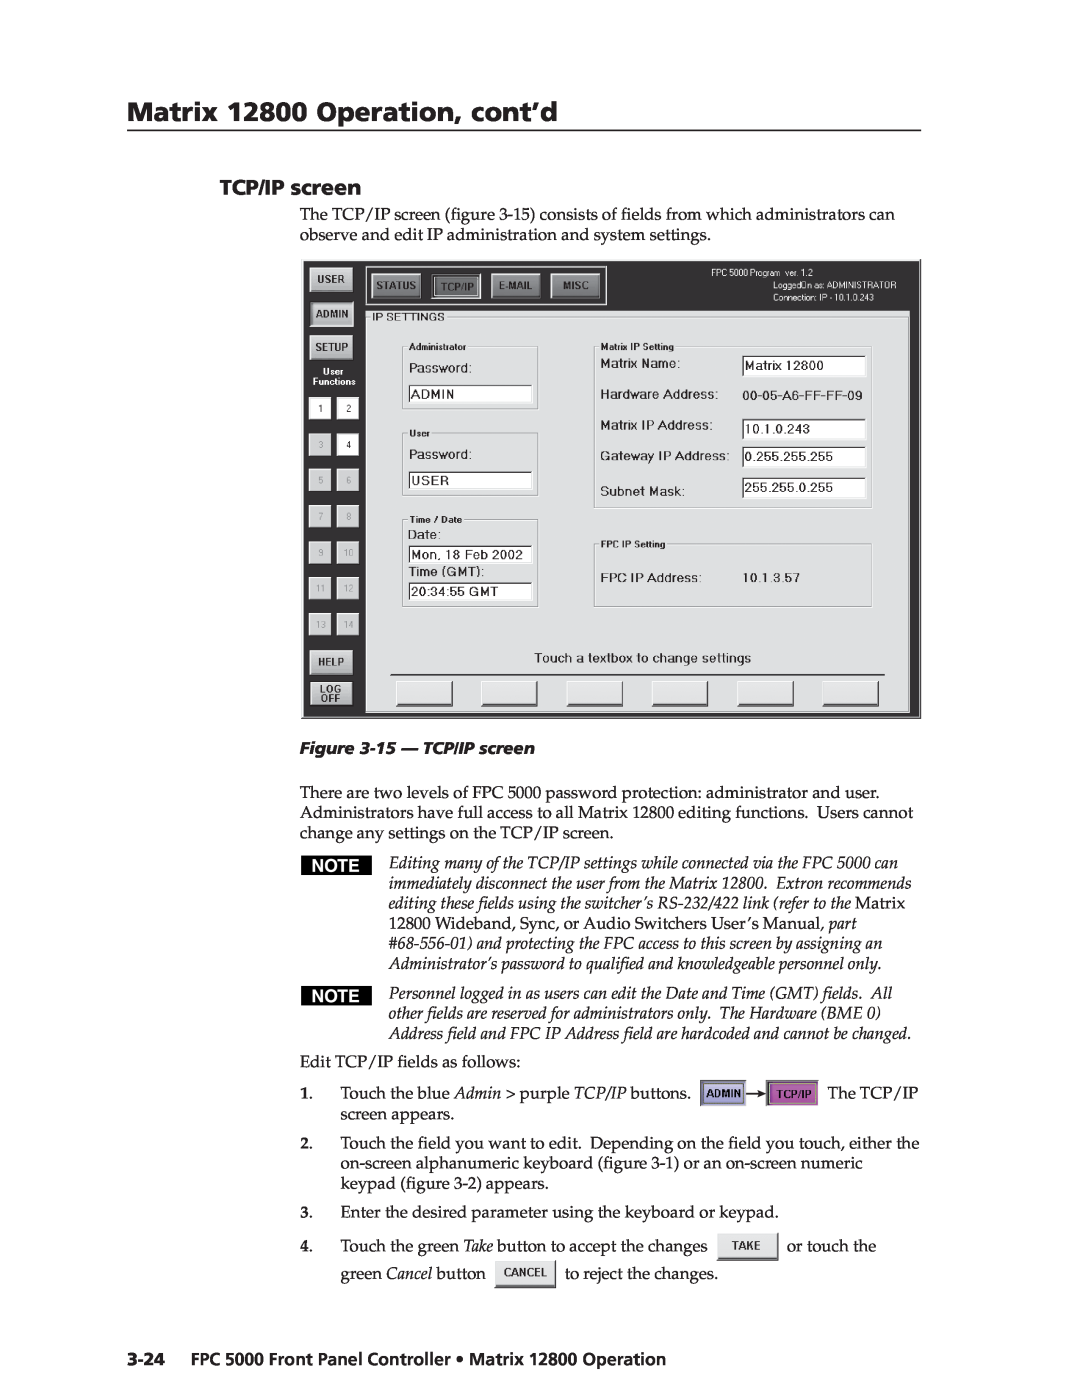 Extron electronic manual 15 - TCP/IP screen, FPC 5000 Front Panel Controller Matrix 12800 Operation 